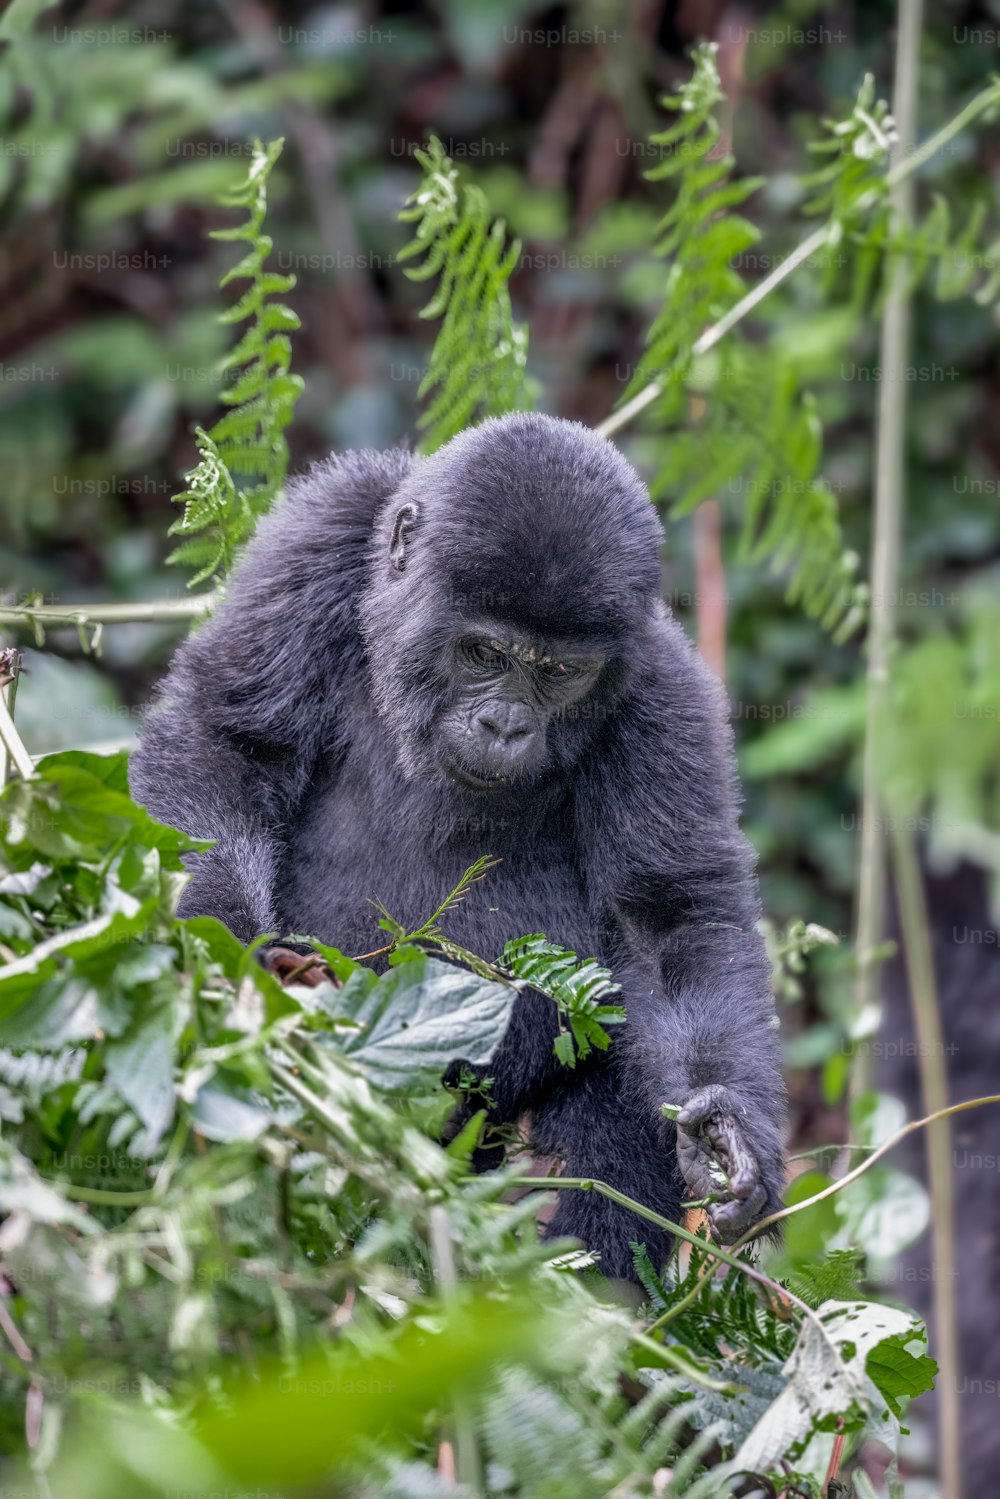 500+ Gorilla Pictures | Download Free Images on Unsplash